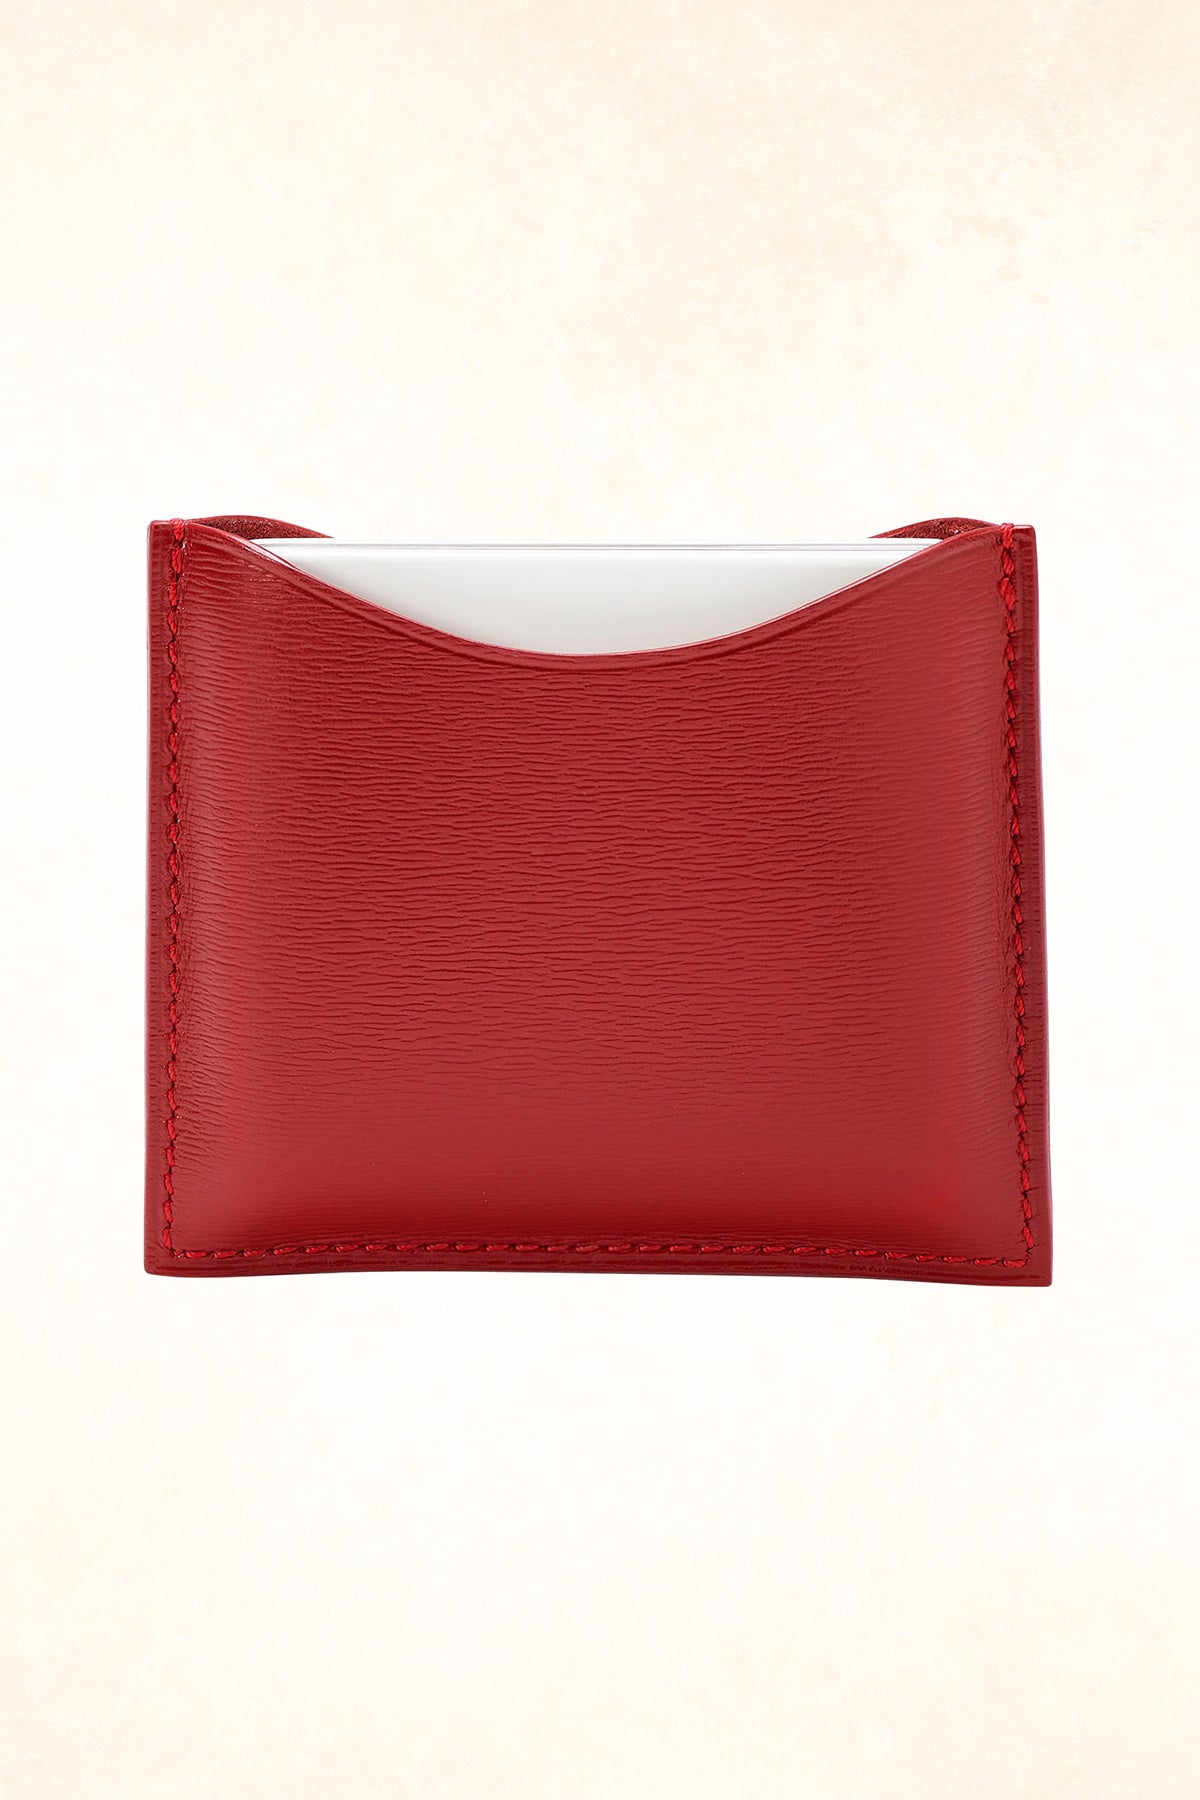 La Bouche Rouge – Refillable Red Fine Leather Compact Case